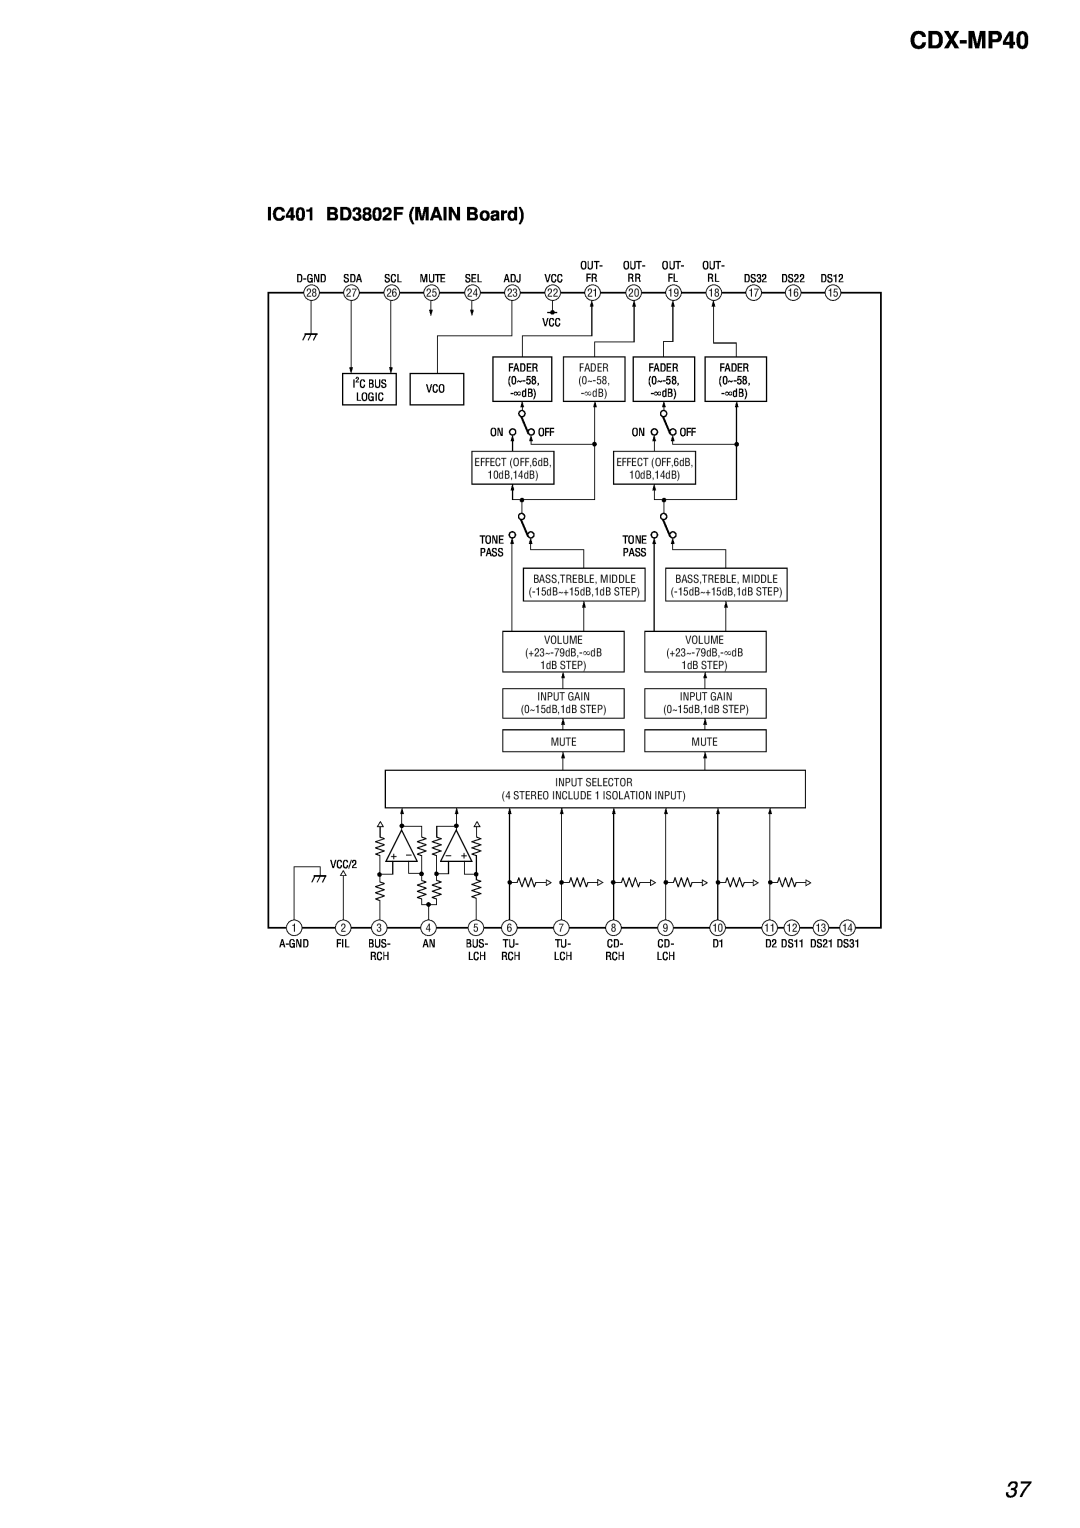 Sony CDX-MP40 service manual IC401 BD3802F MAIN Board 